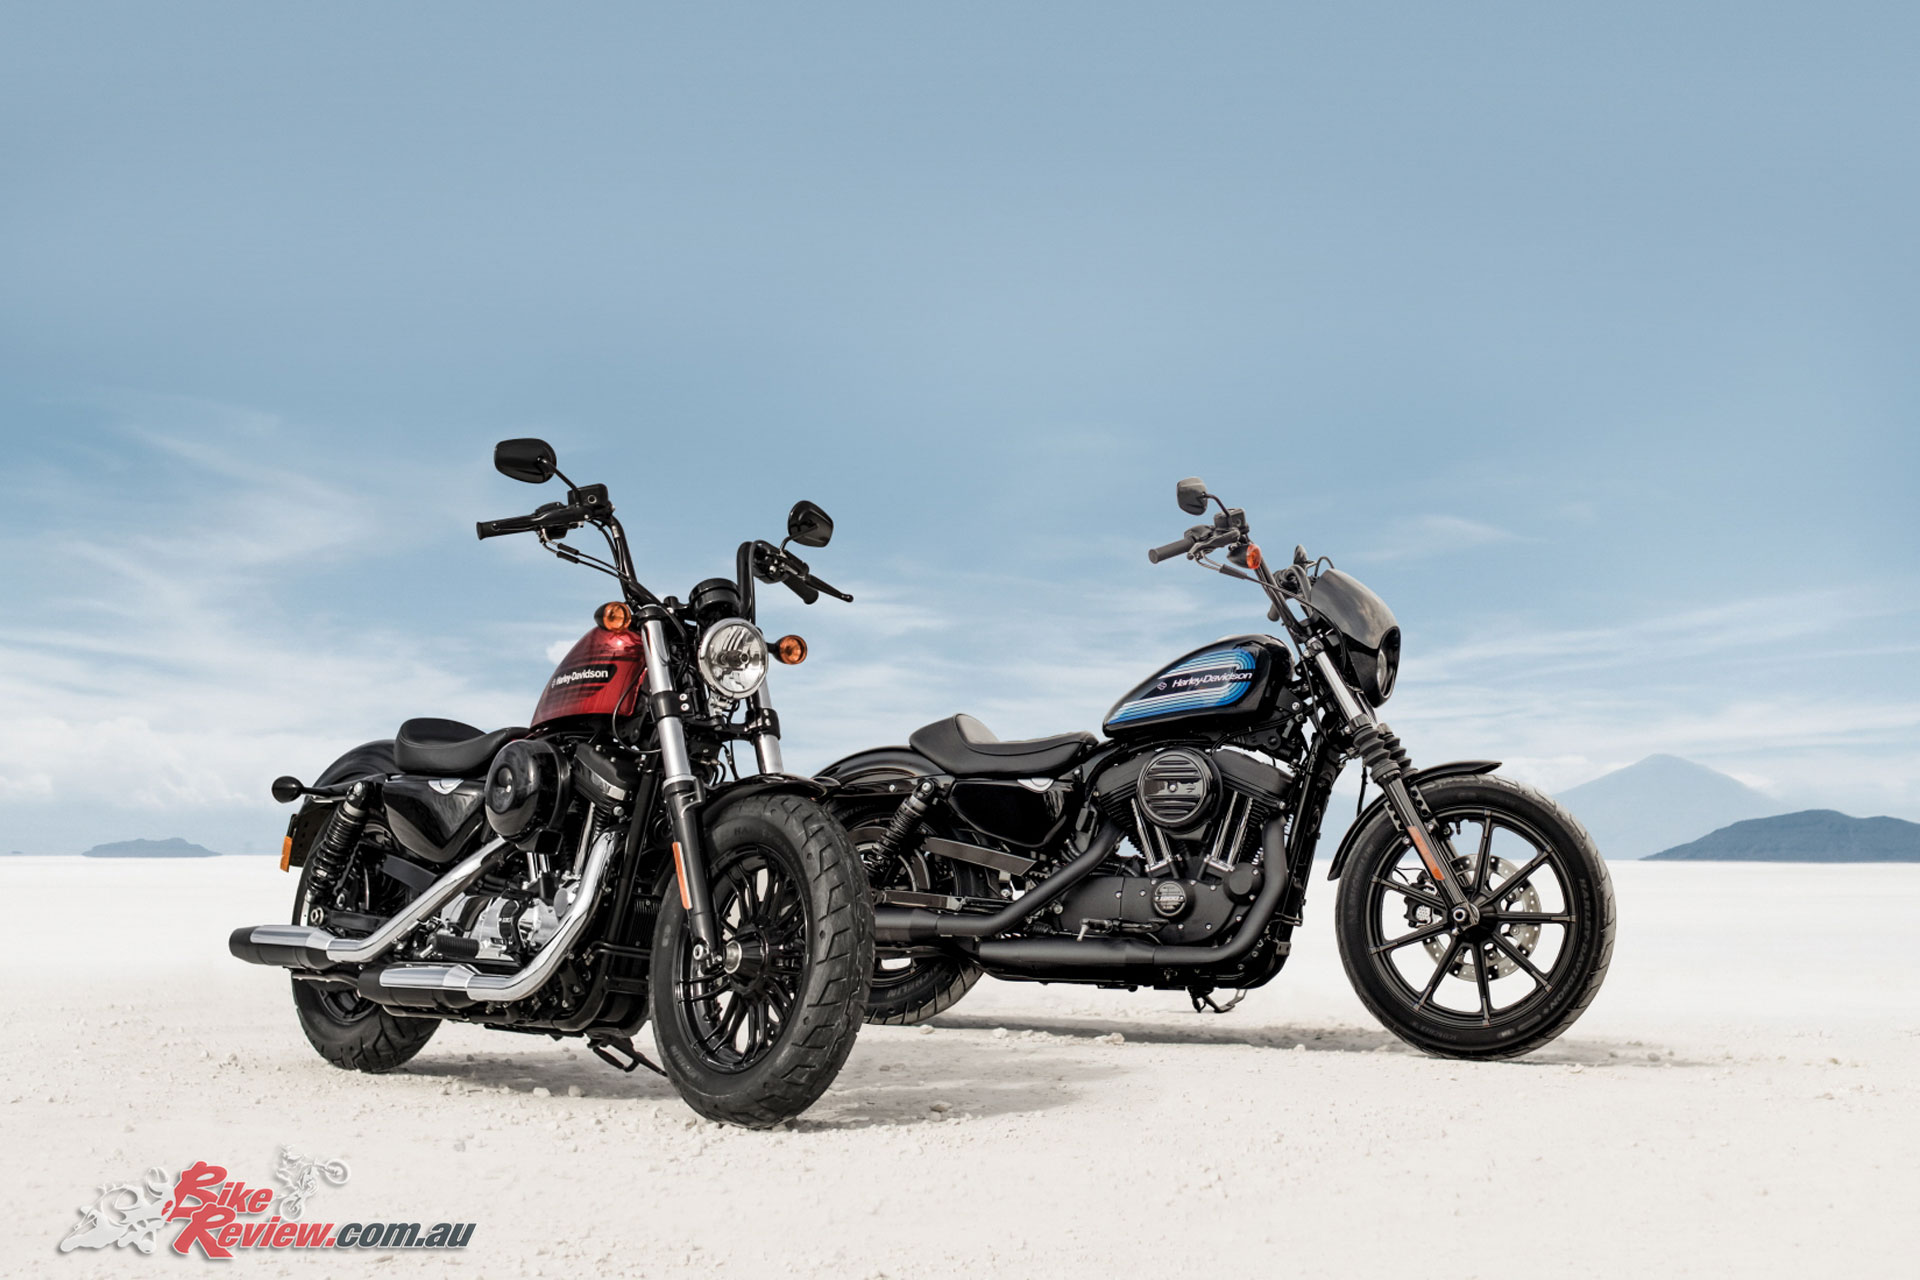 New Model 2018 Harley Davidson Iron 1200 Bike Review